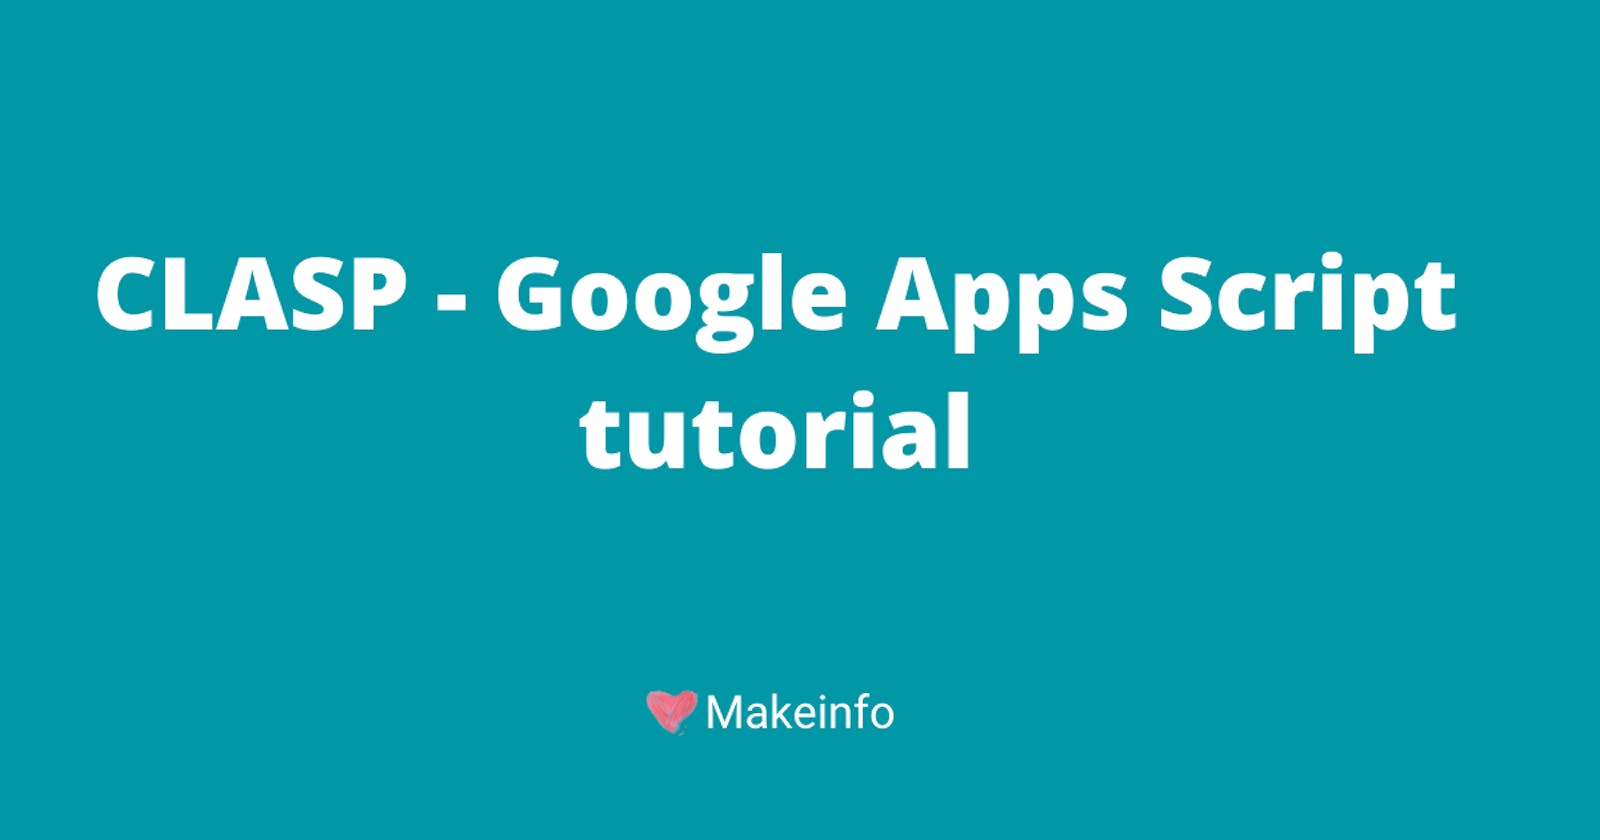 CLASP - Google Apps Script tutorial